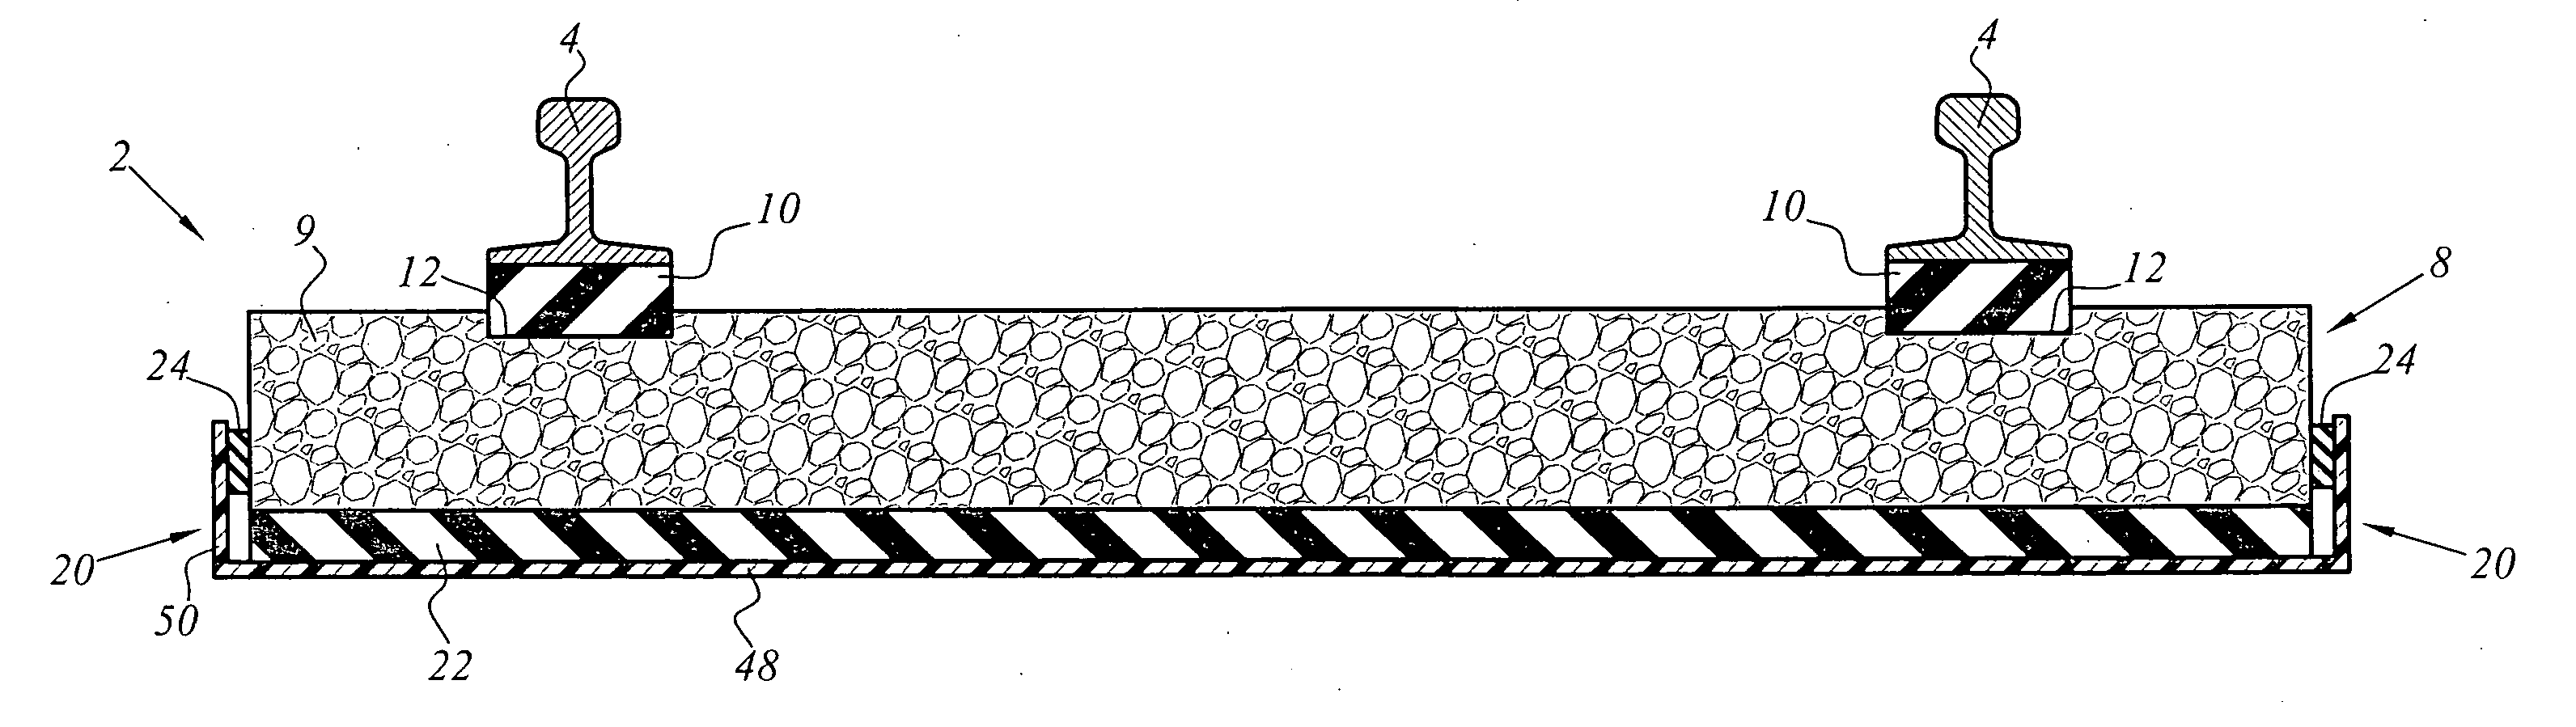 Rail track tie